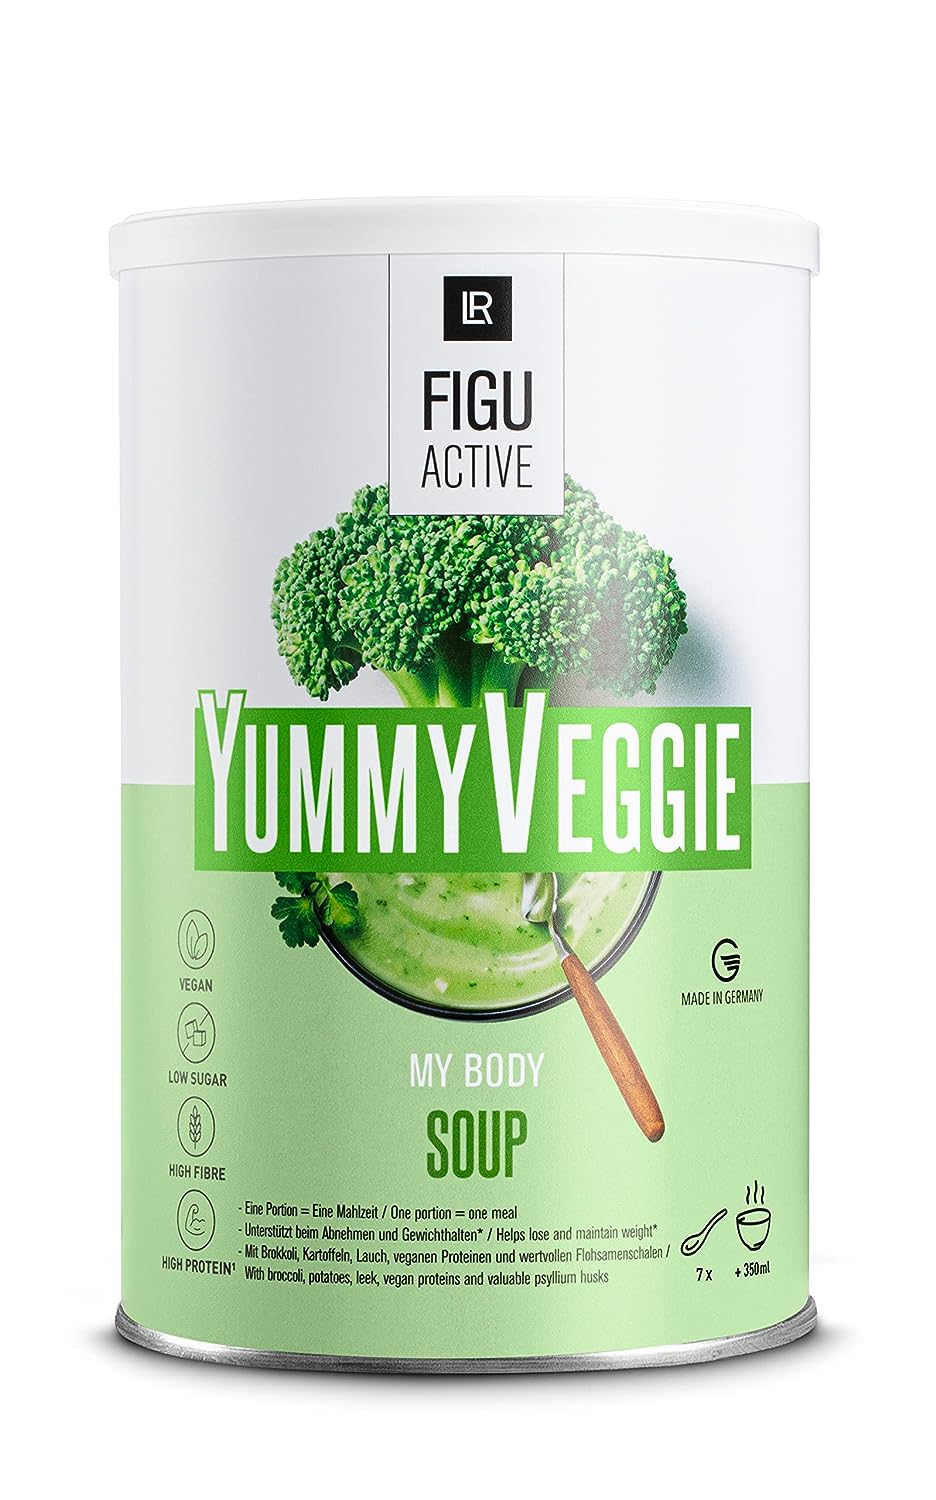 LR Figuactive Yummy Veggie Soup 488g